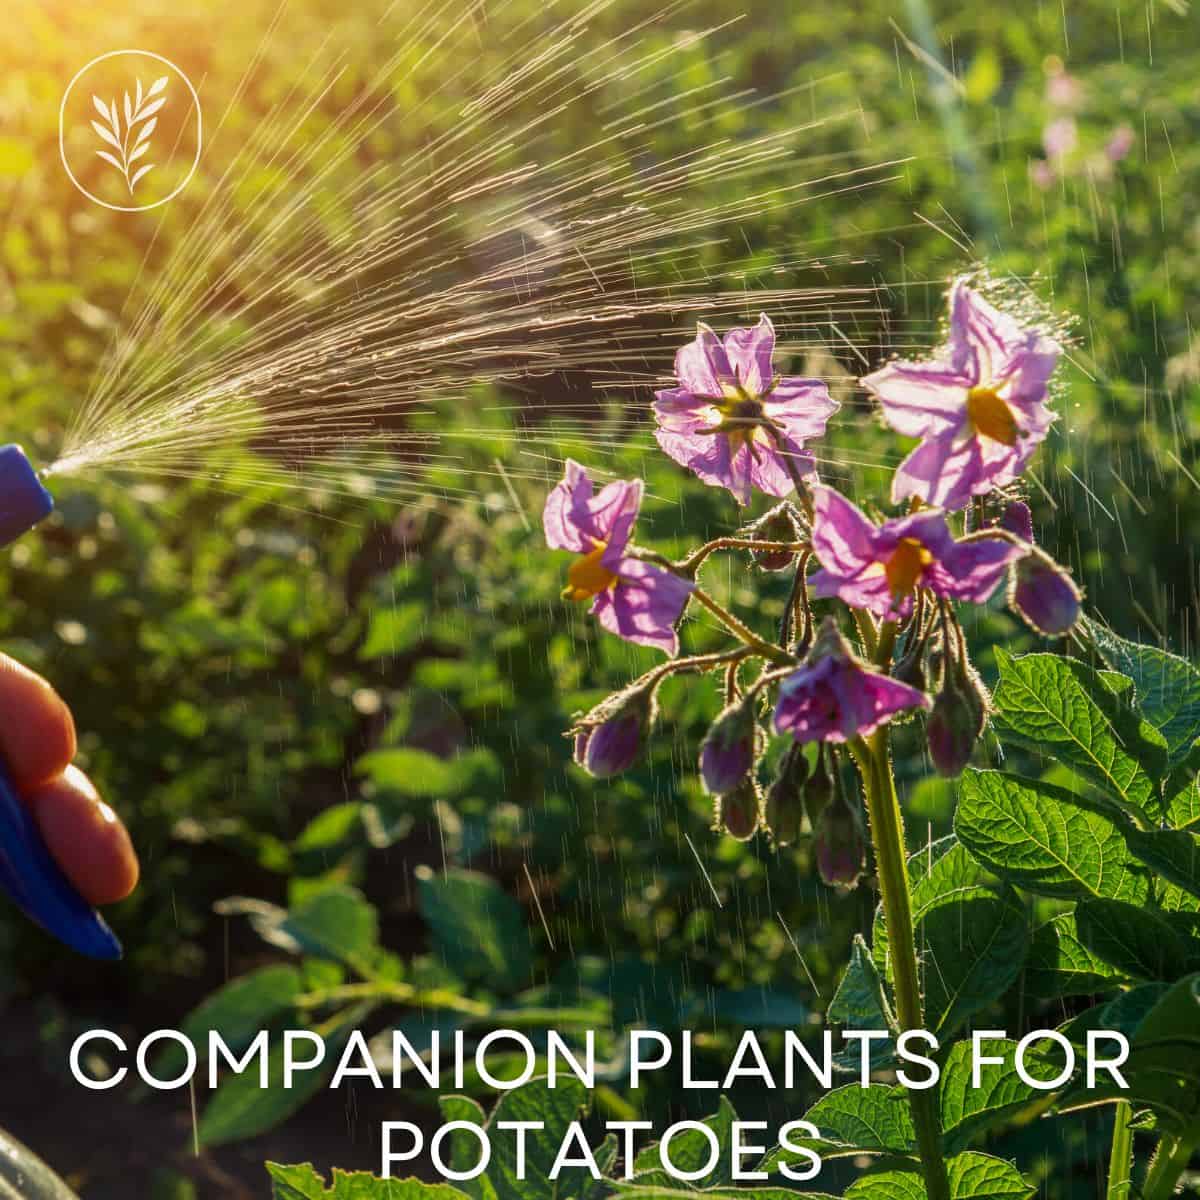 Companion plants for potatoes via @home4theharvest